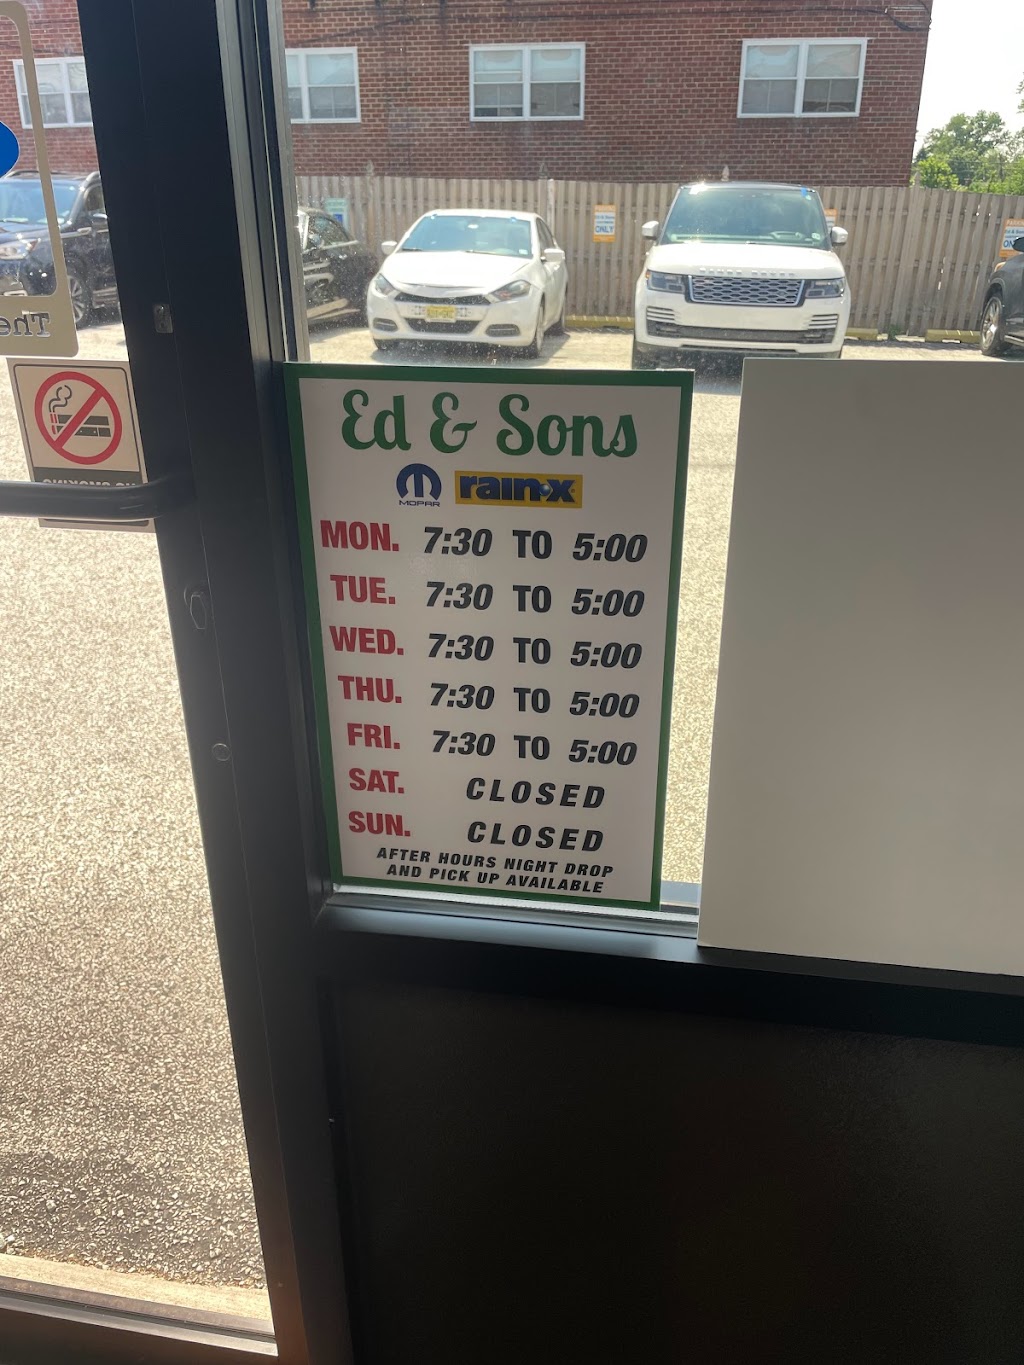 Ed & Sons Auto Glass | 619 E Main St, Maple Shade, NJ 08052 | Phone: (856) 779-0043